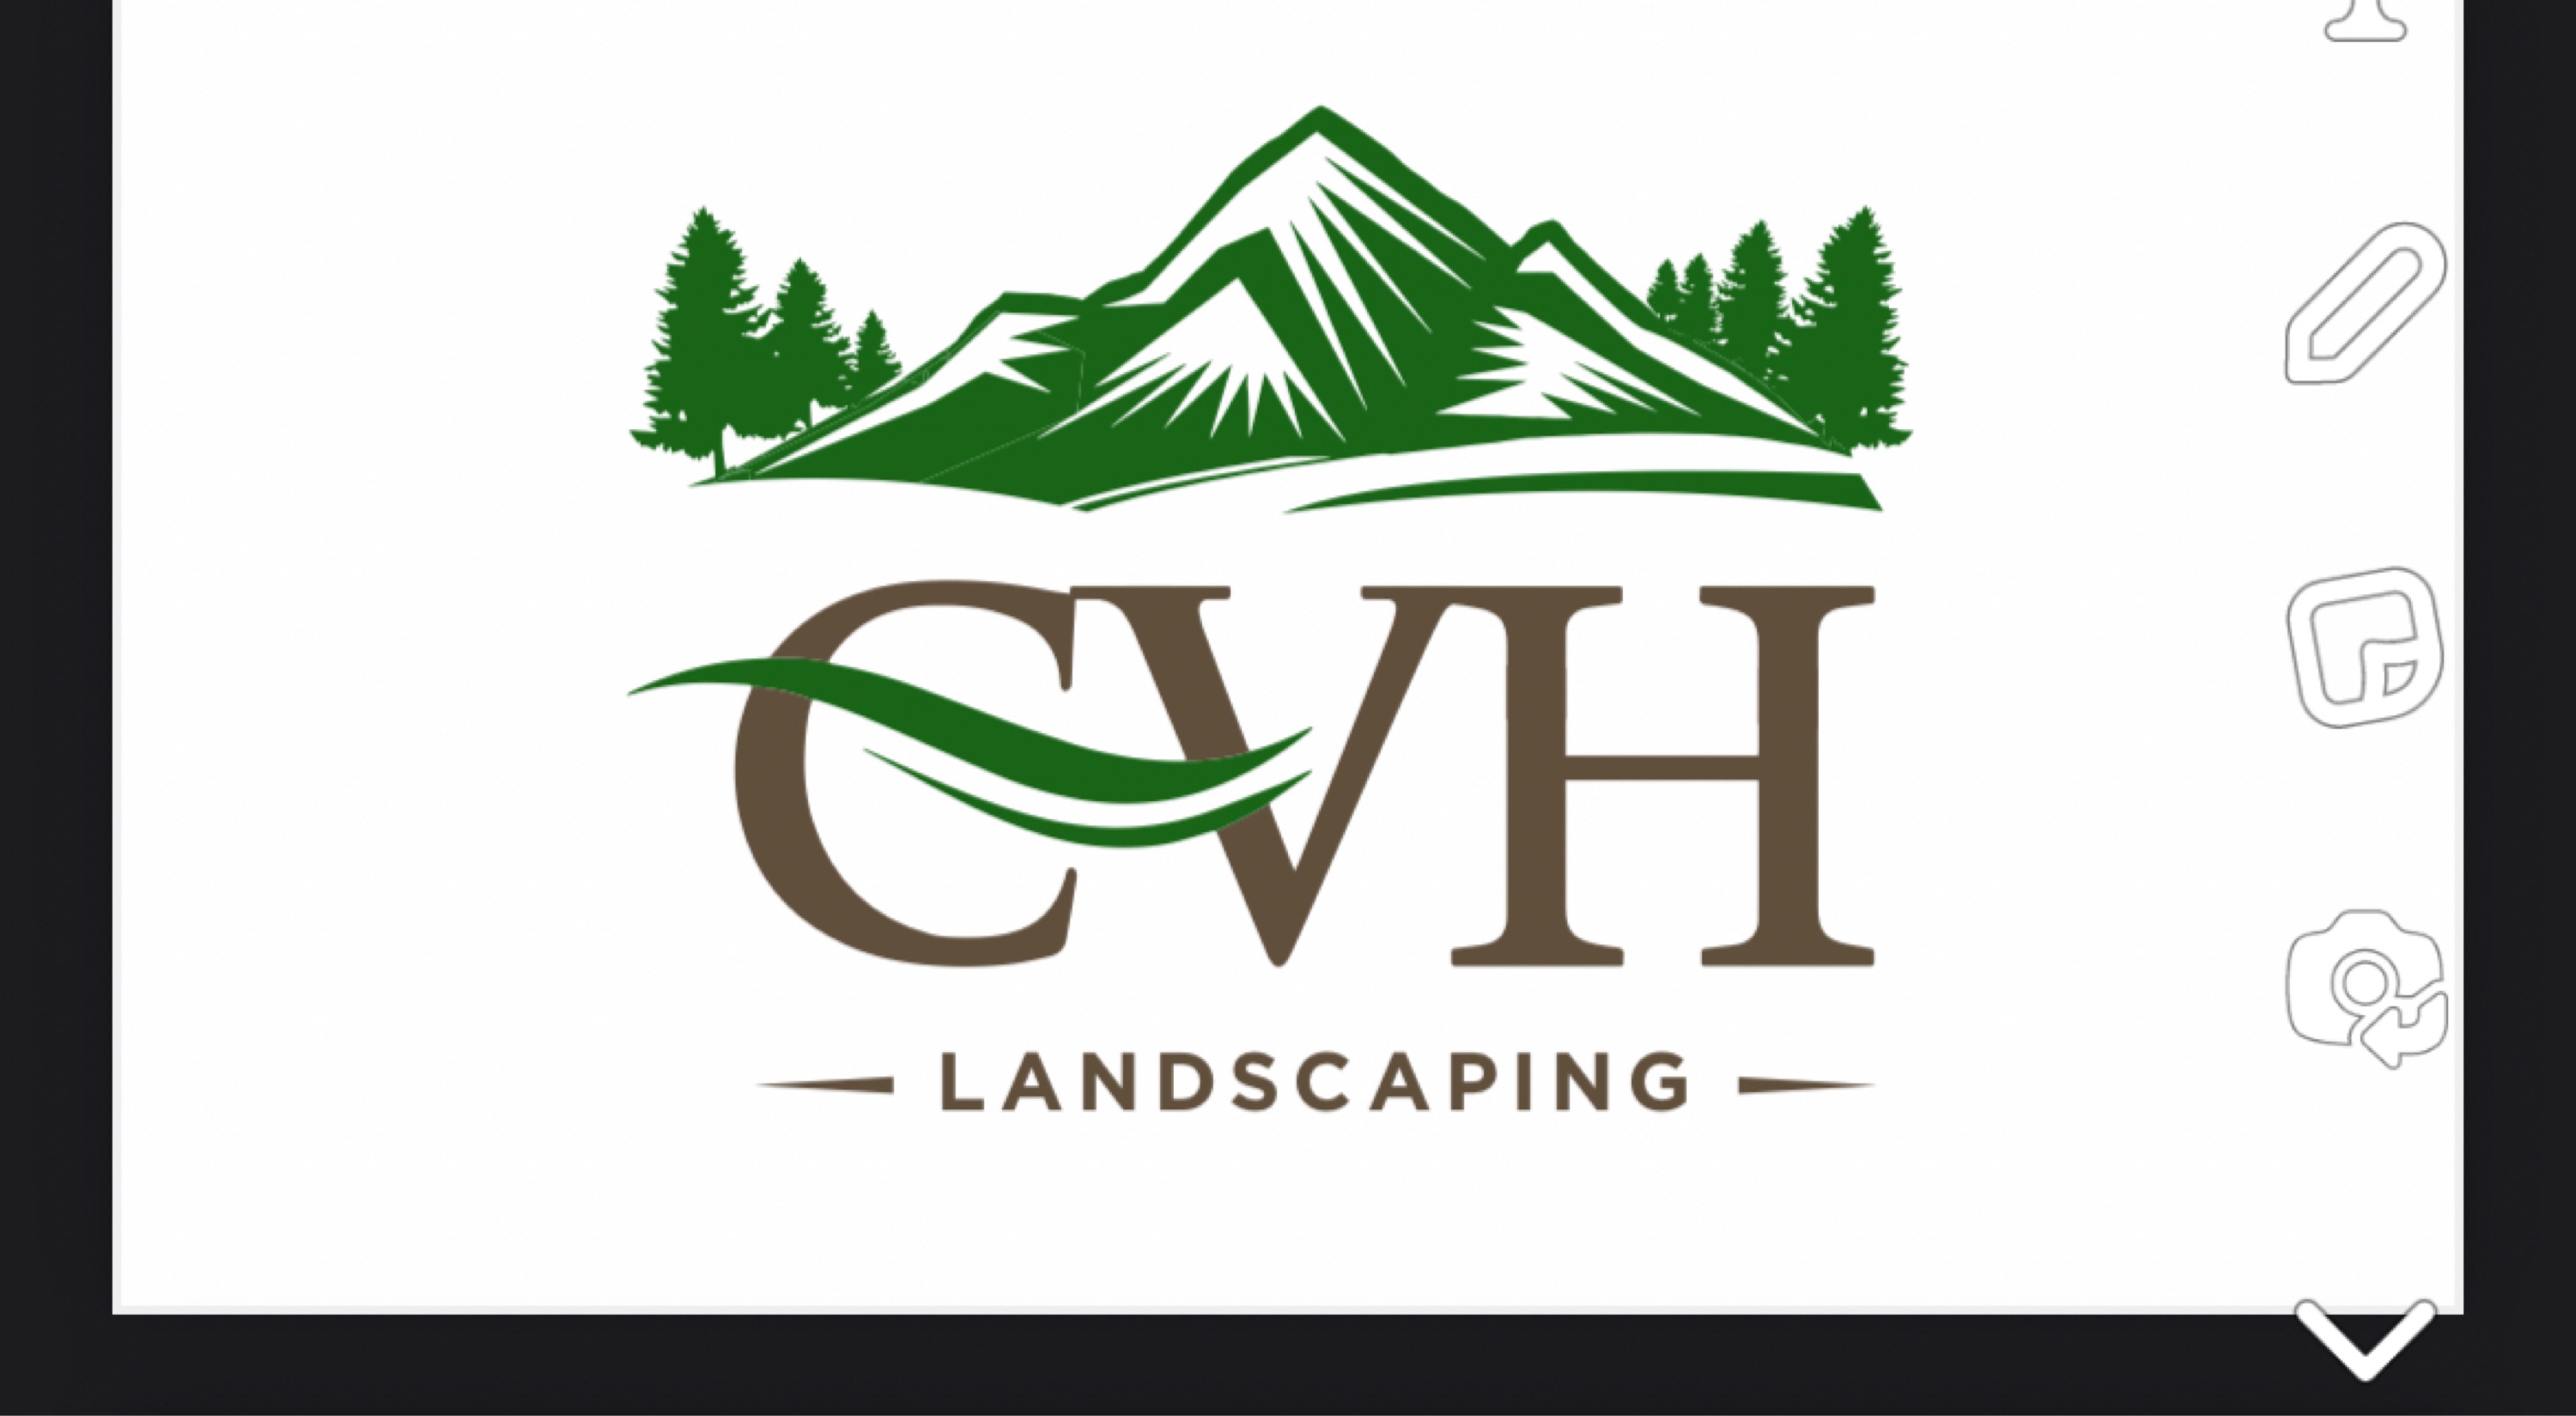 CVH Landscaping Logo